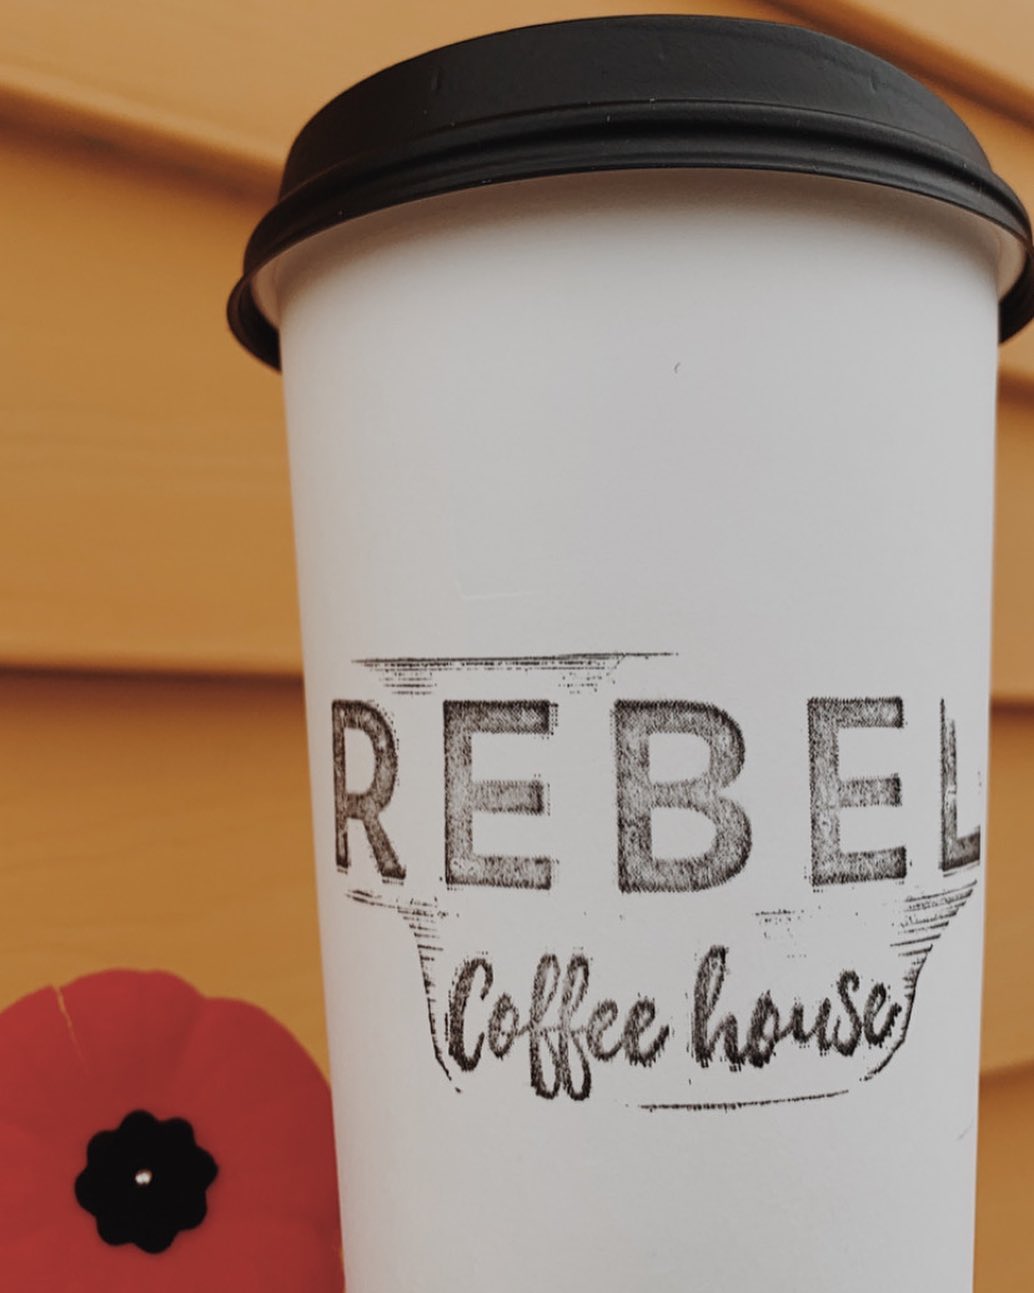 Rebel Coffee House